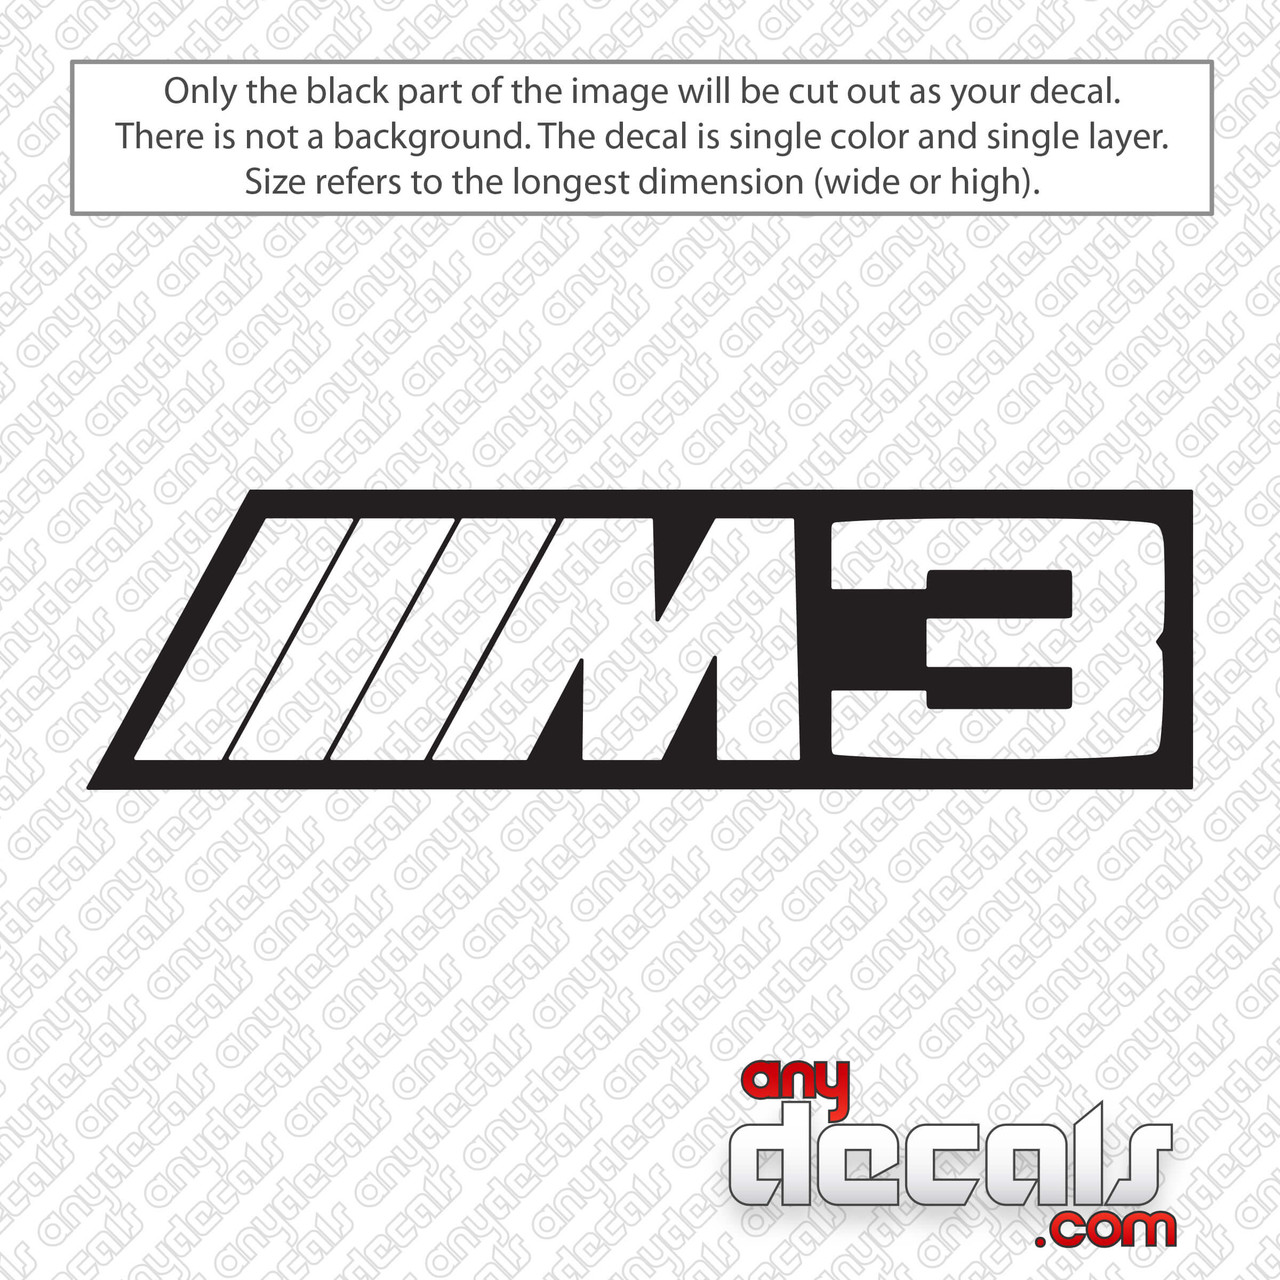 BMW M3 Logo Outline Decal Sticker 